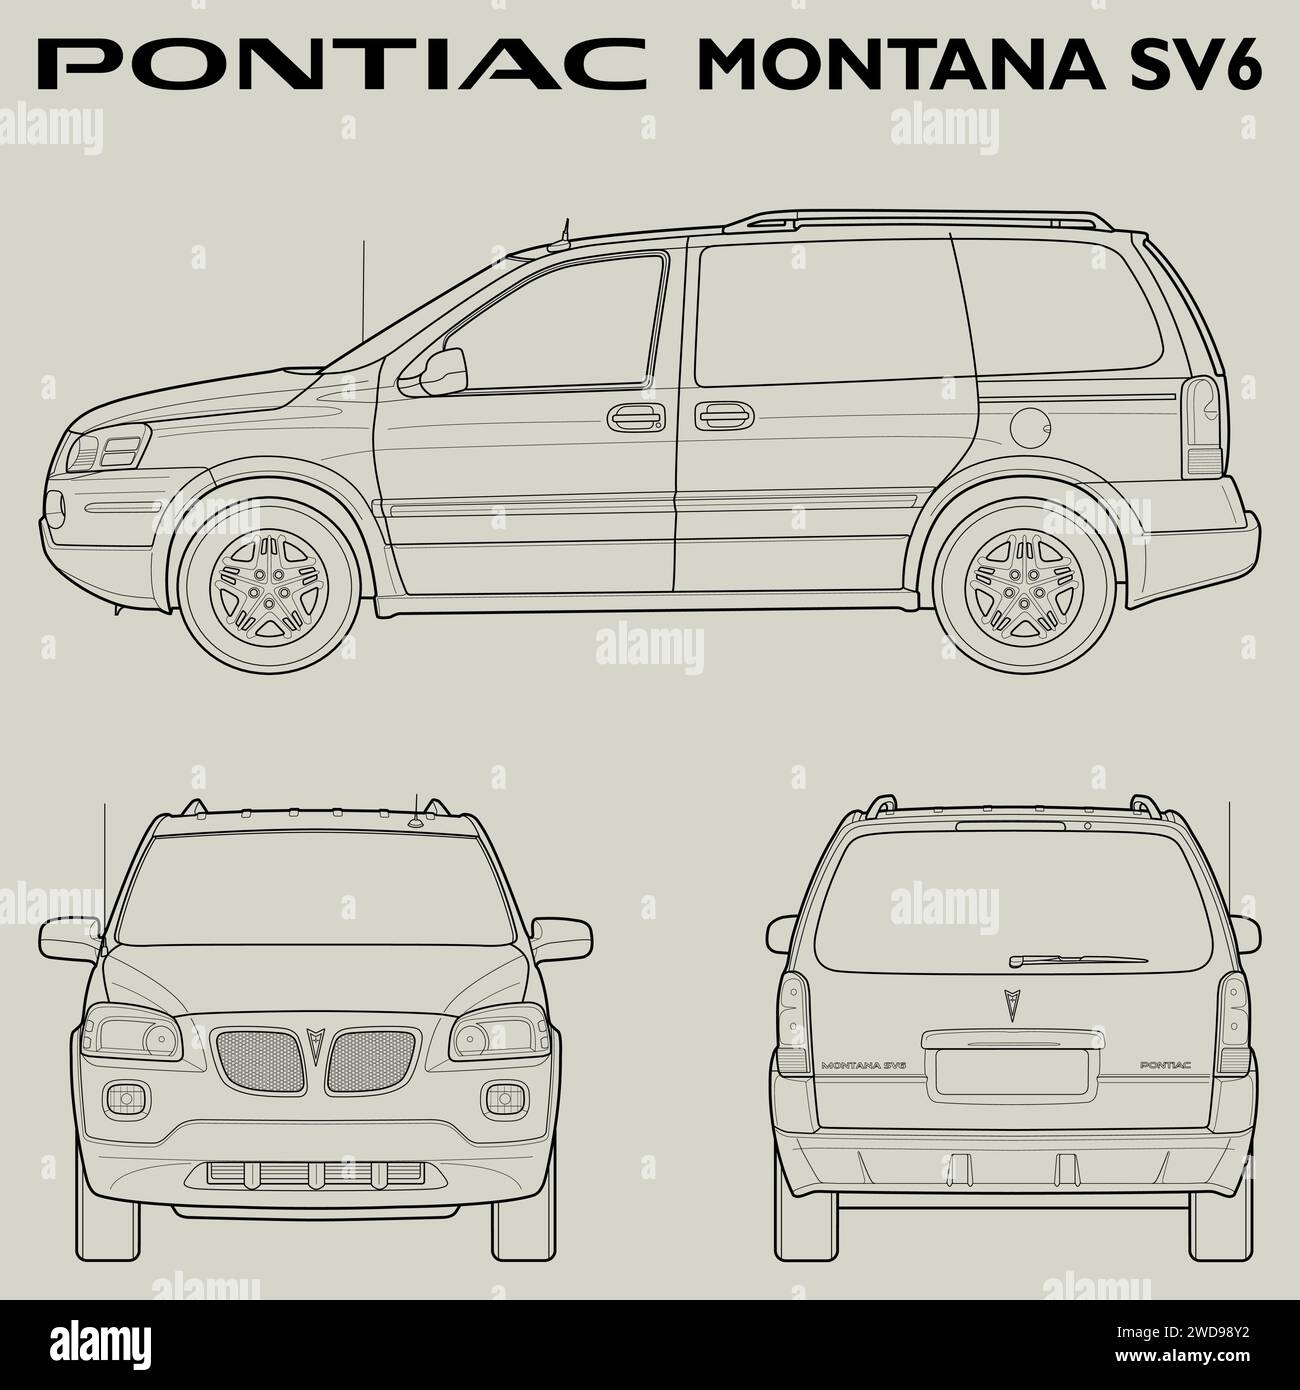 2005 Pontiac Montana SV6 car blueprint Stock Vector